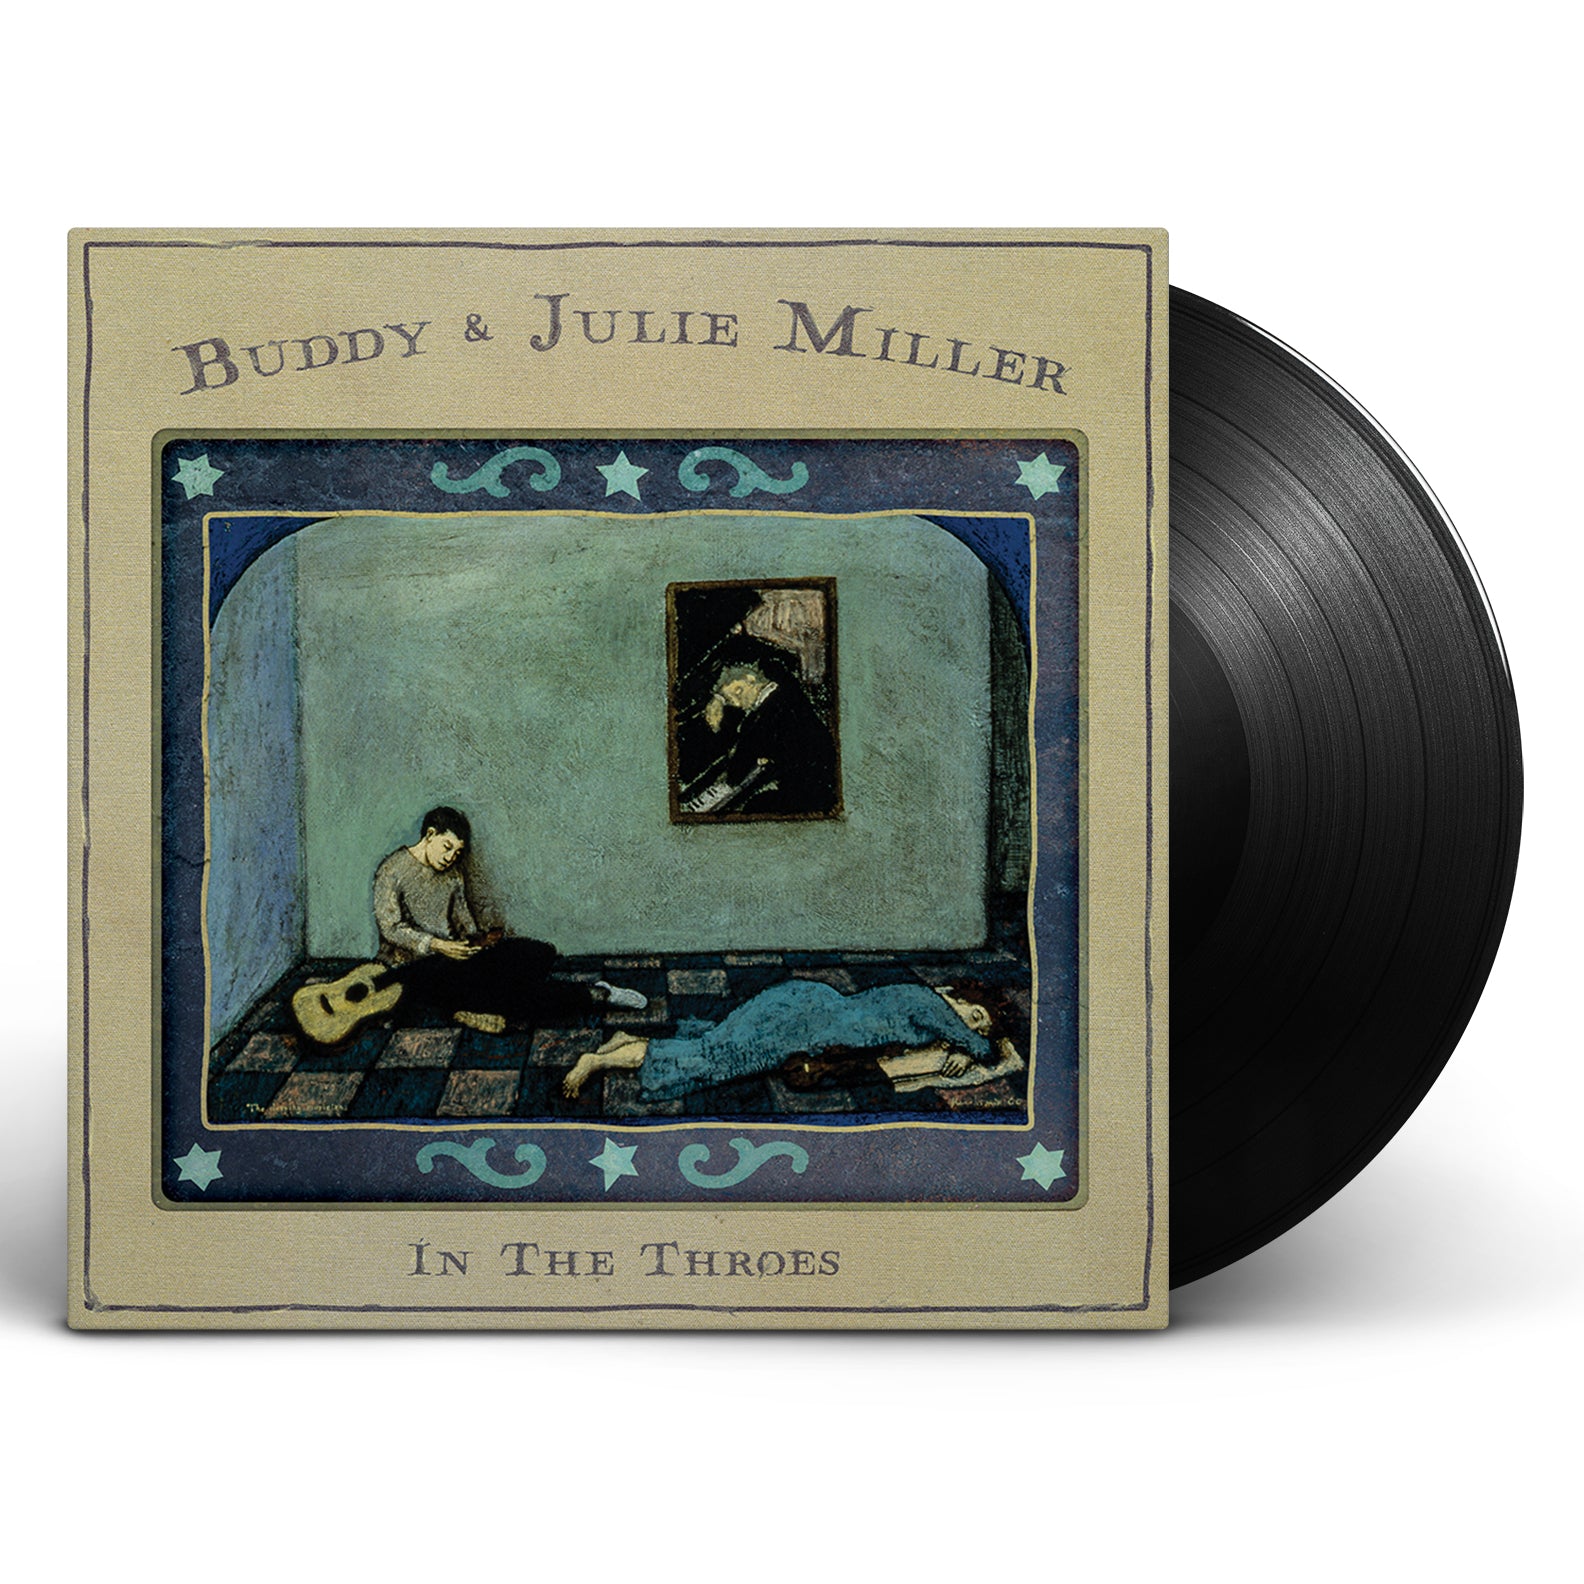 Buddy & Julie Miller - In The Throes [Vinyl]